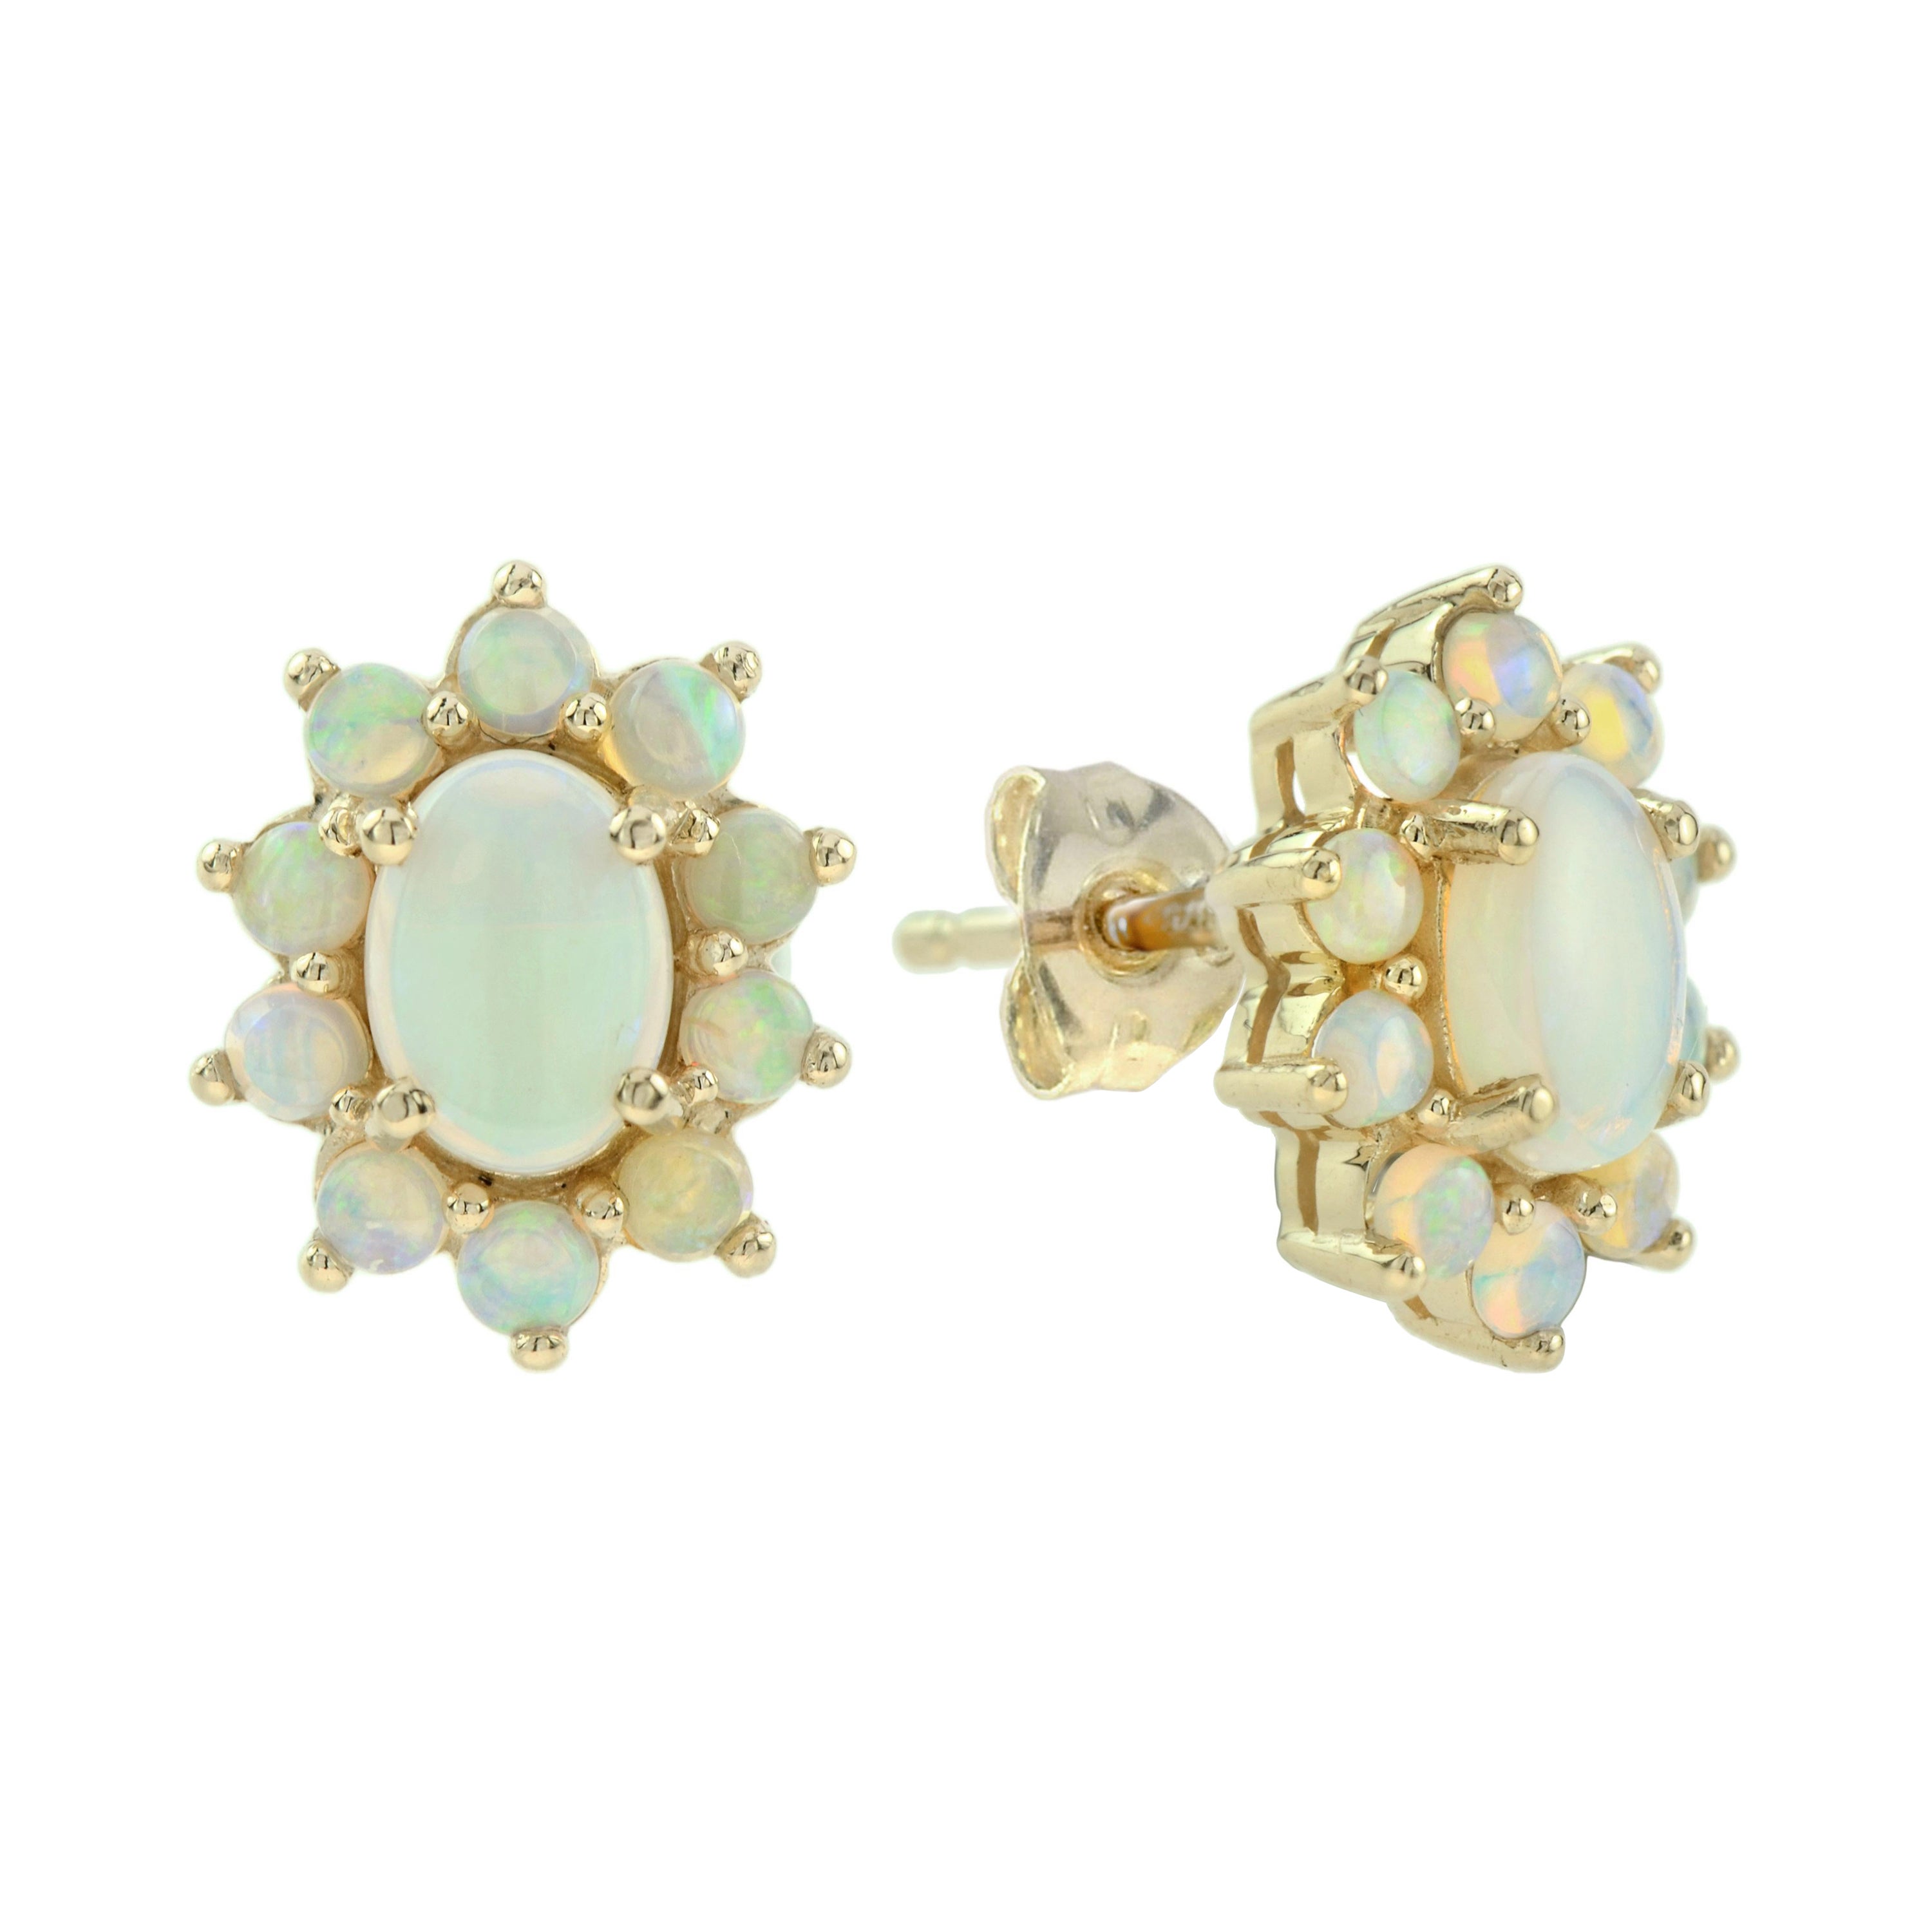 Opal Vintage Style Cluster Stud Earrings in 9K Yellow Gold